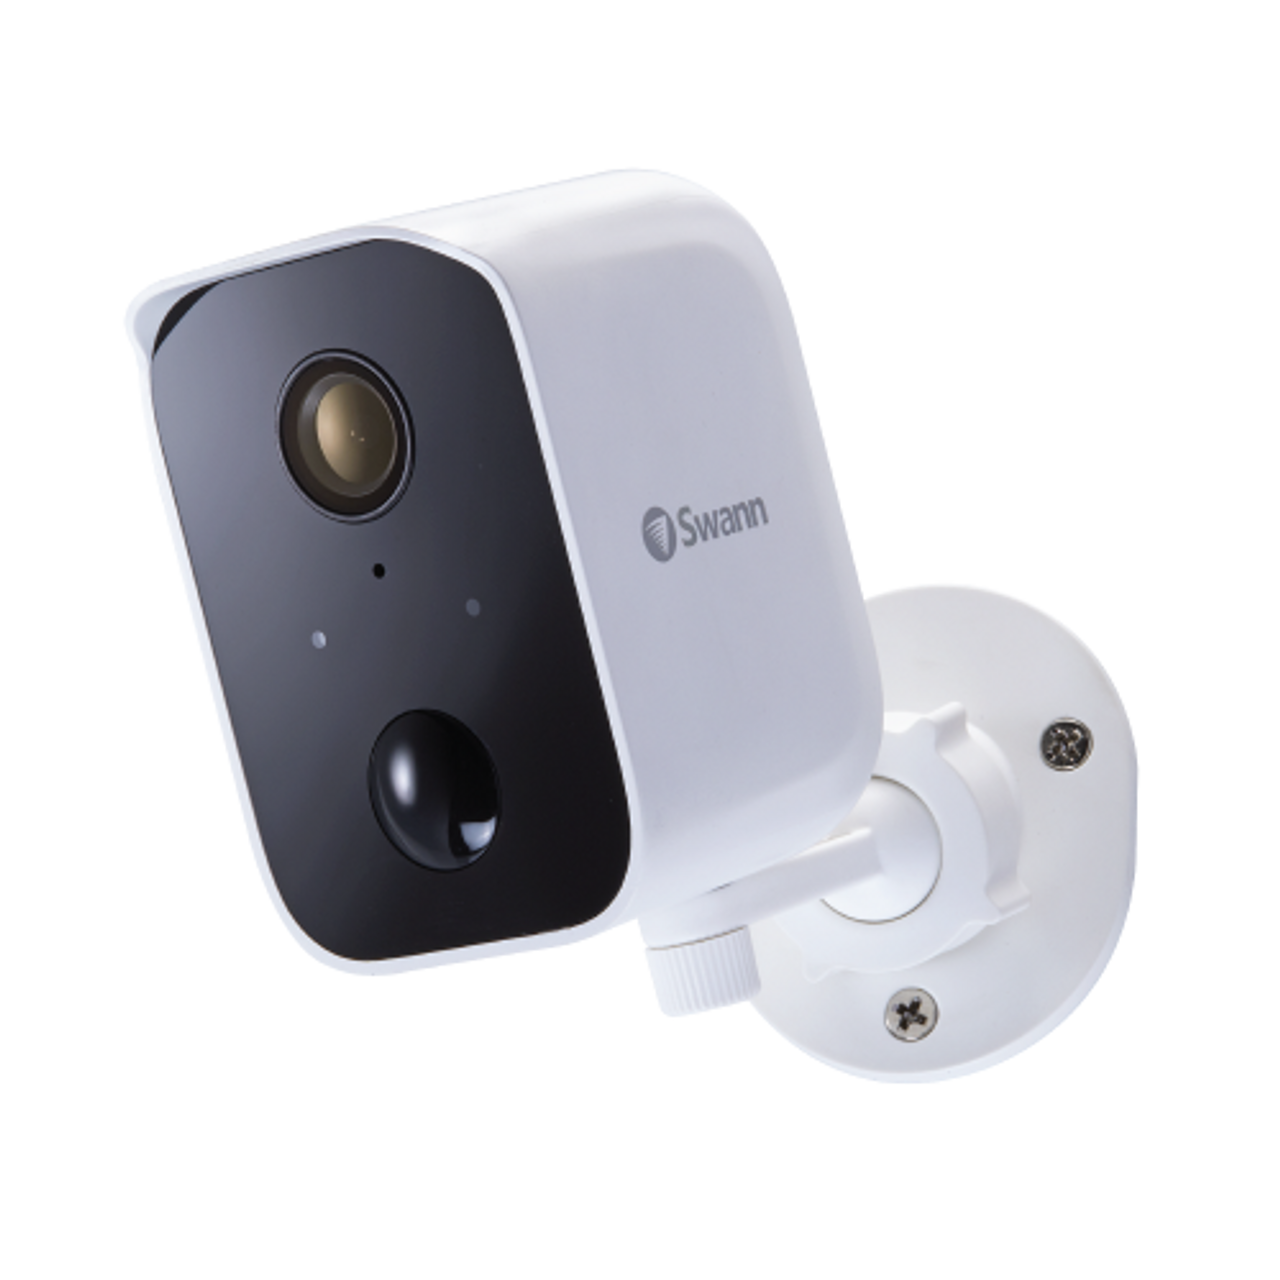 corecam wireless security camera - swifi-corecam   tech supply shed